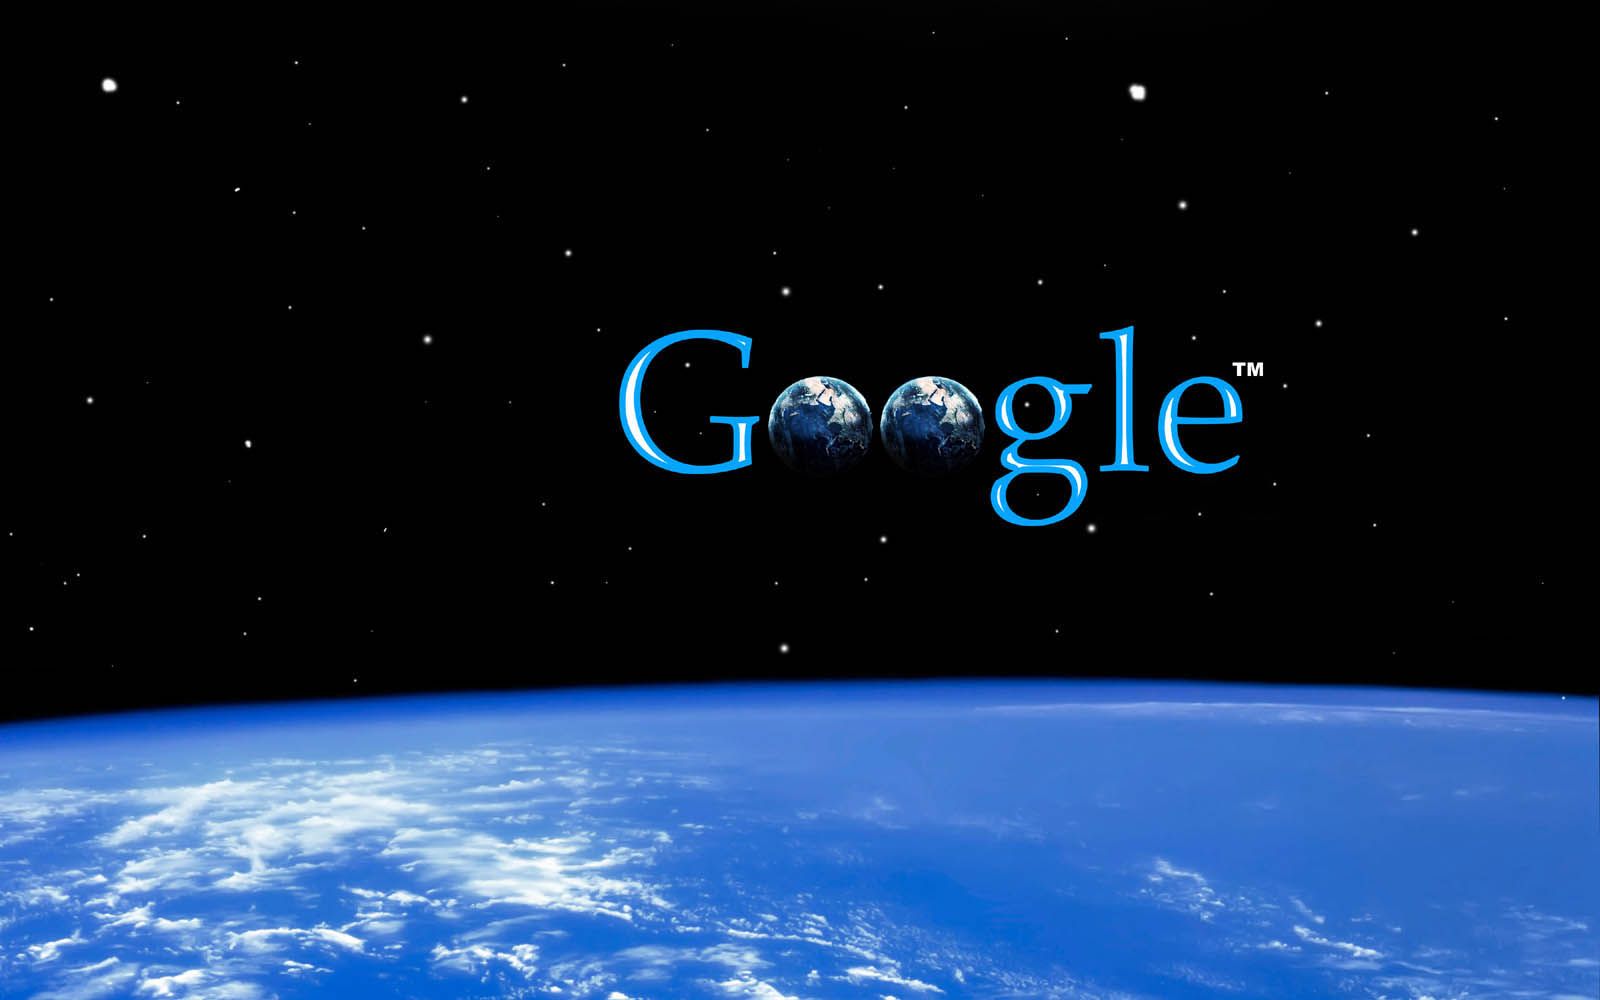 Google Backgrounds